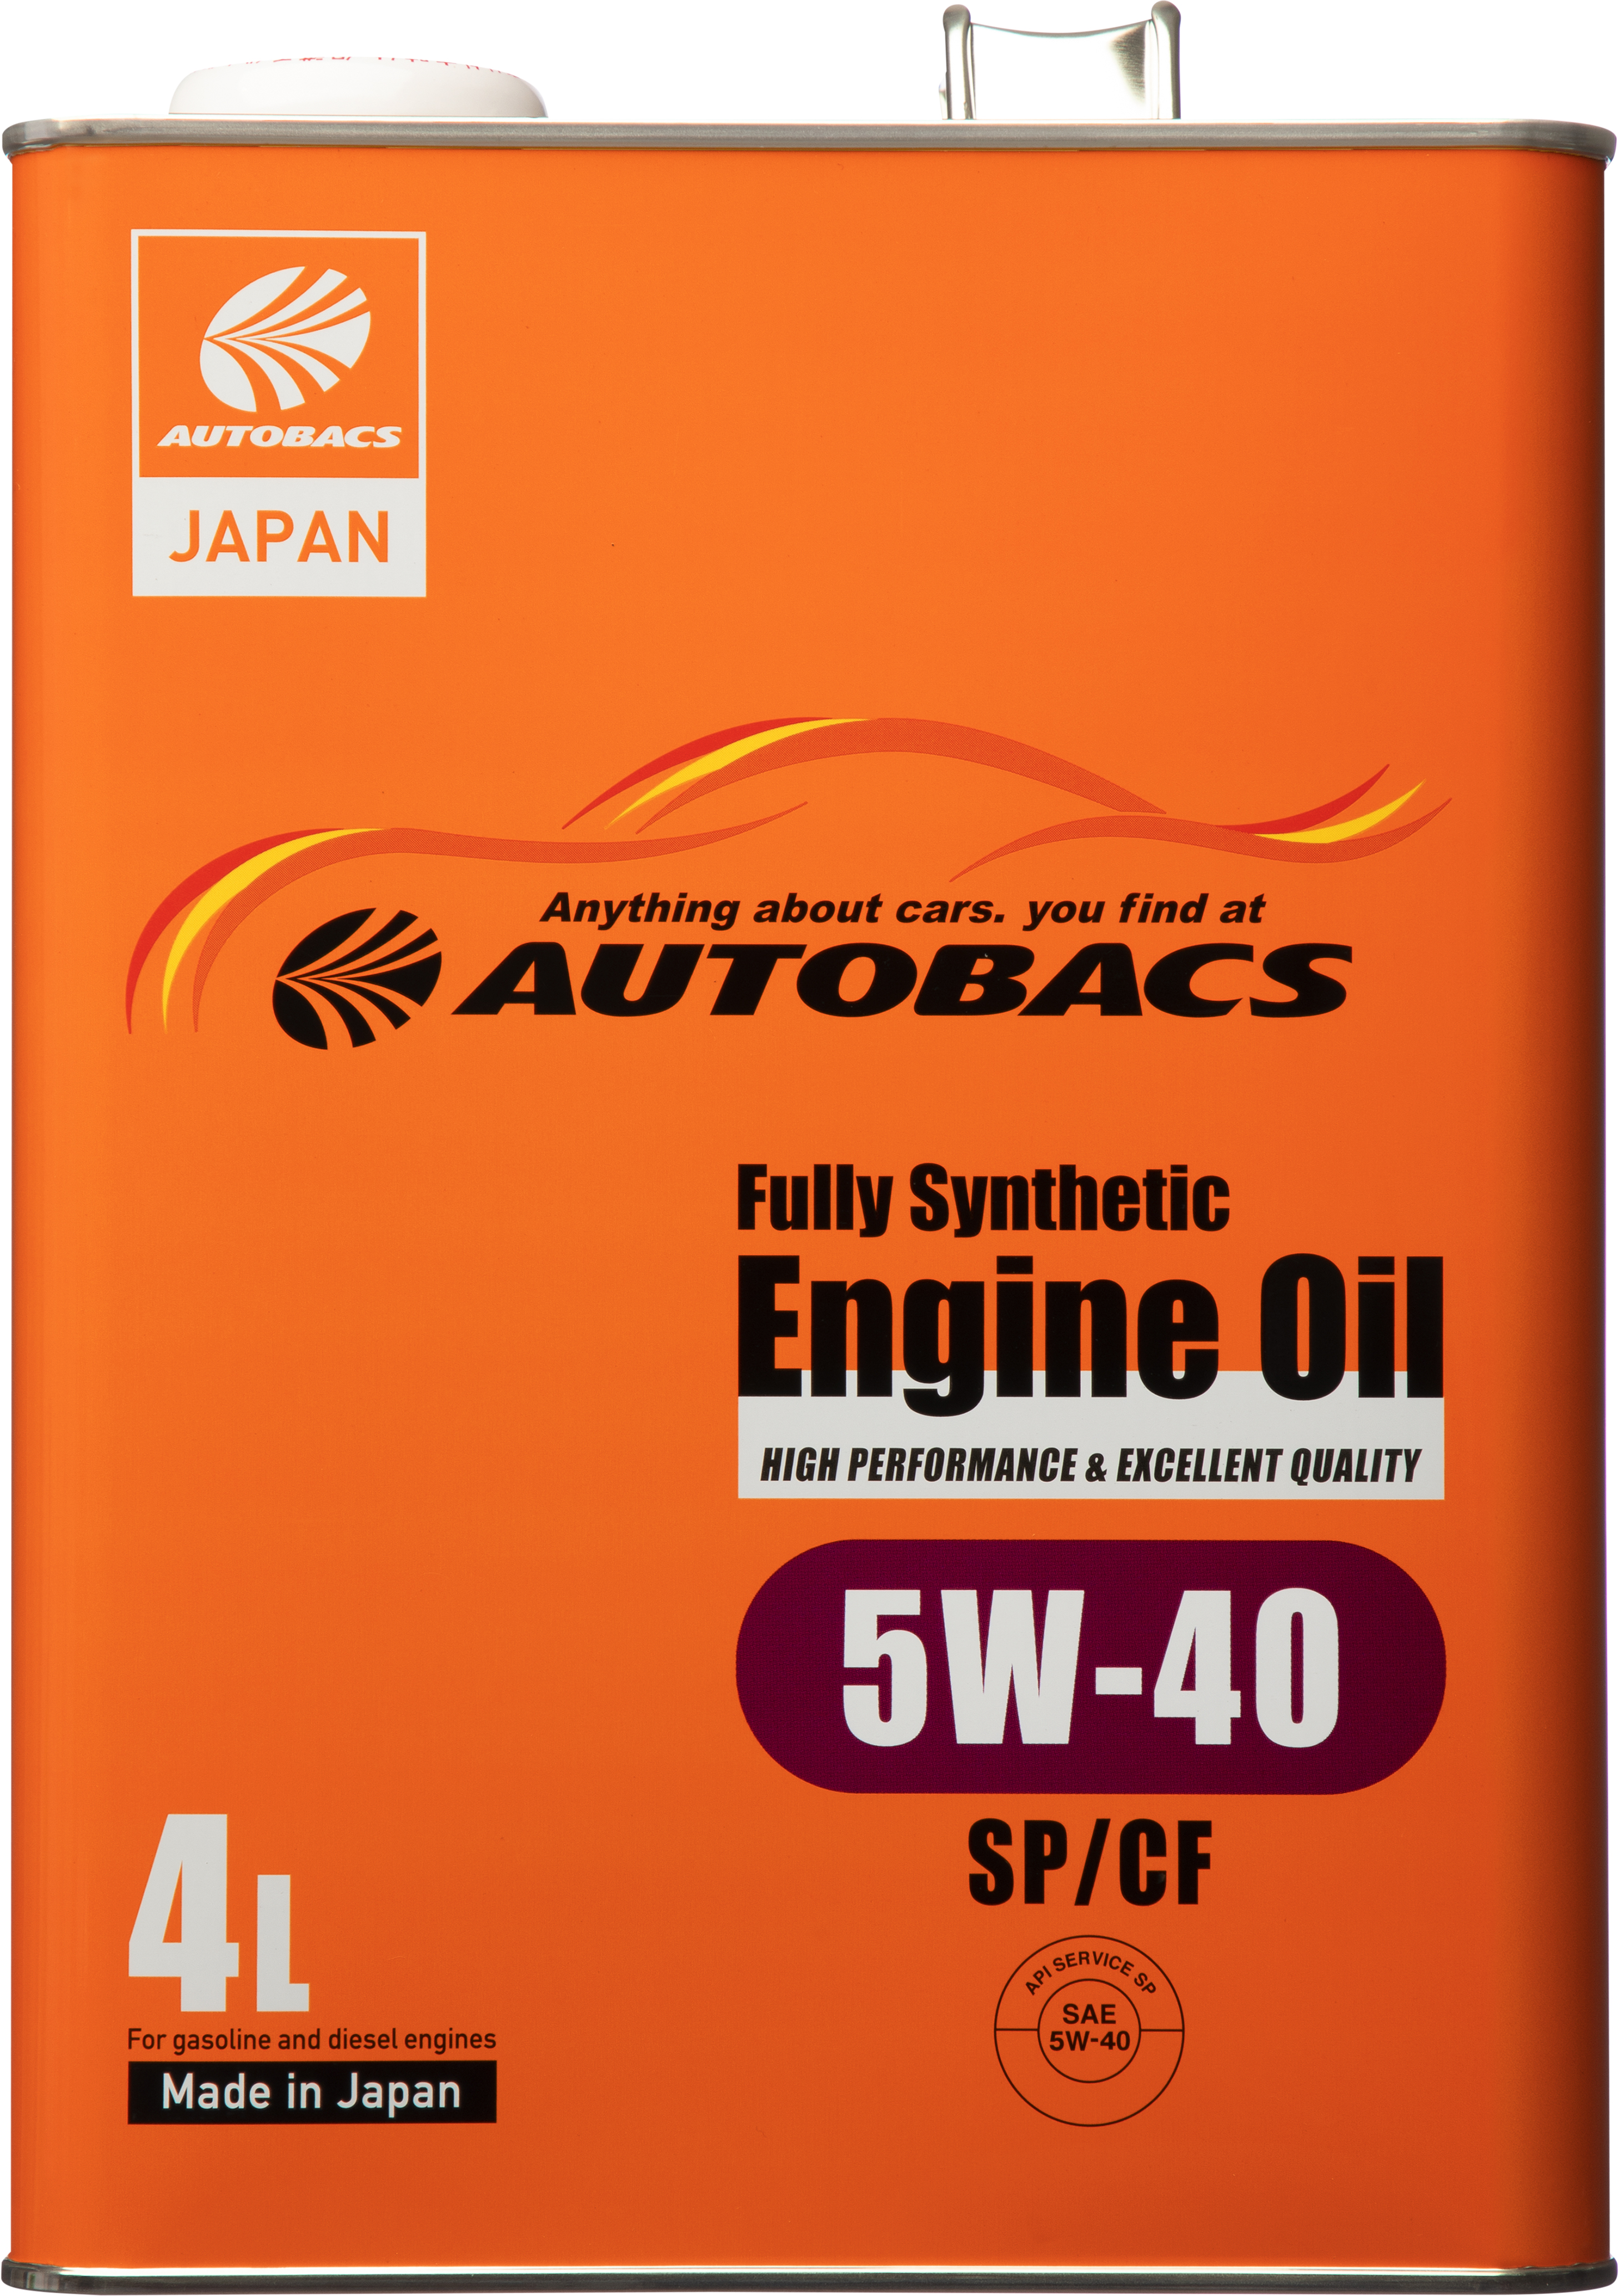 AUTOBACS engine oil 5W40 SP/CF (4L)